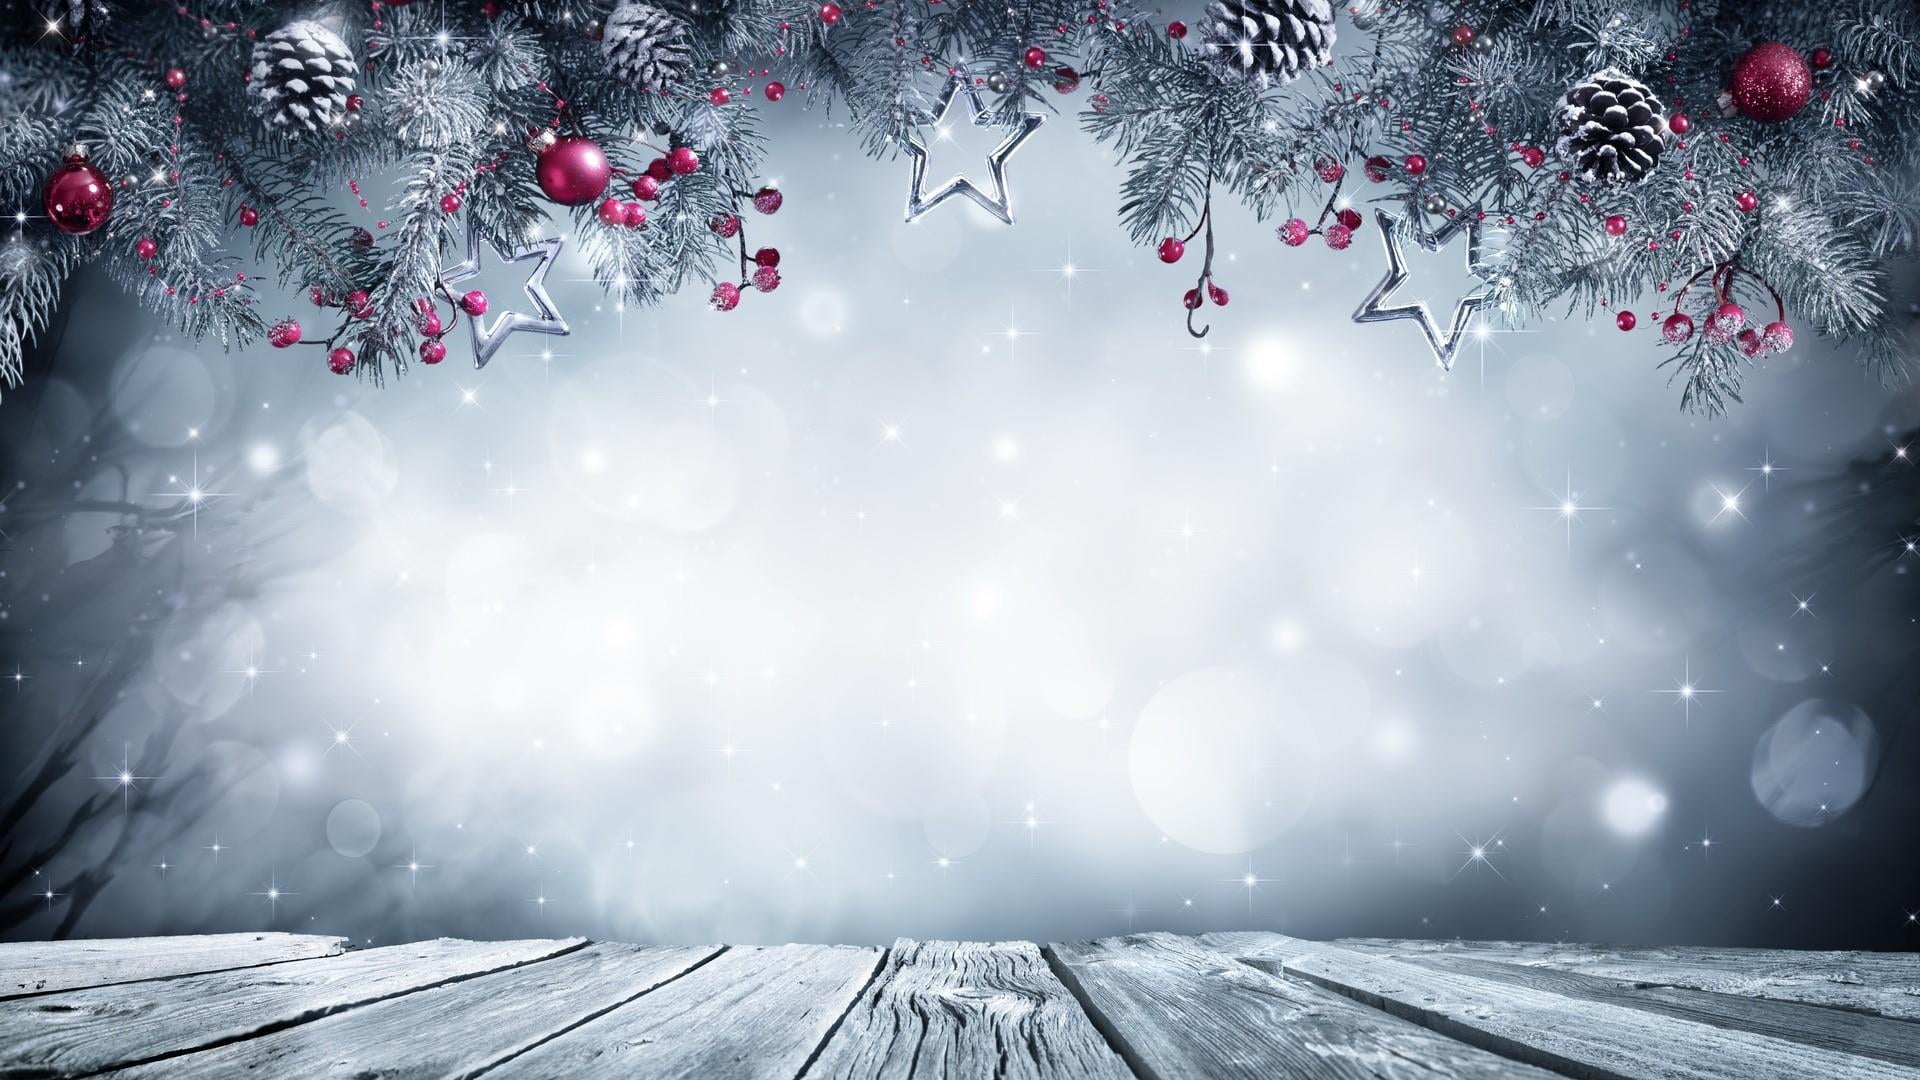 Christmas Holiday Decor, white color, snowing, nature, celebration